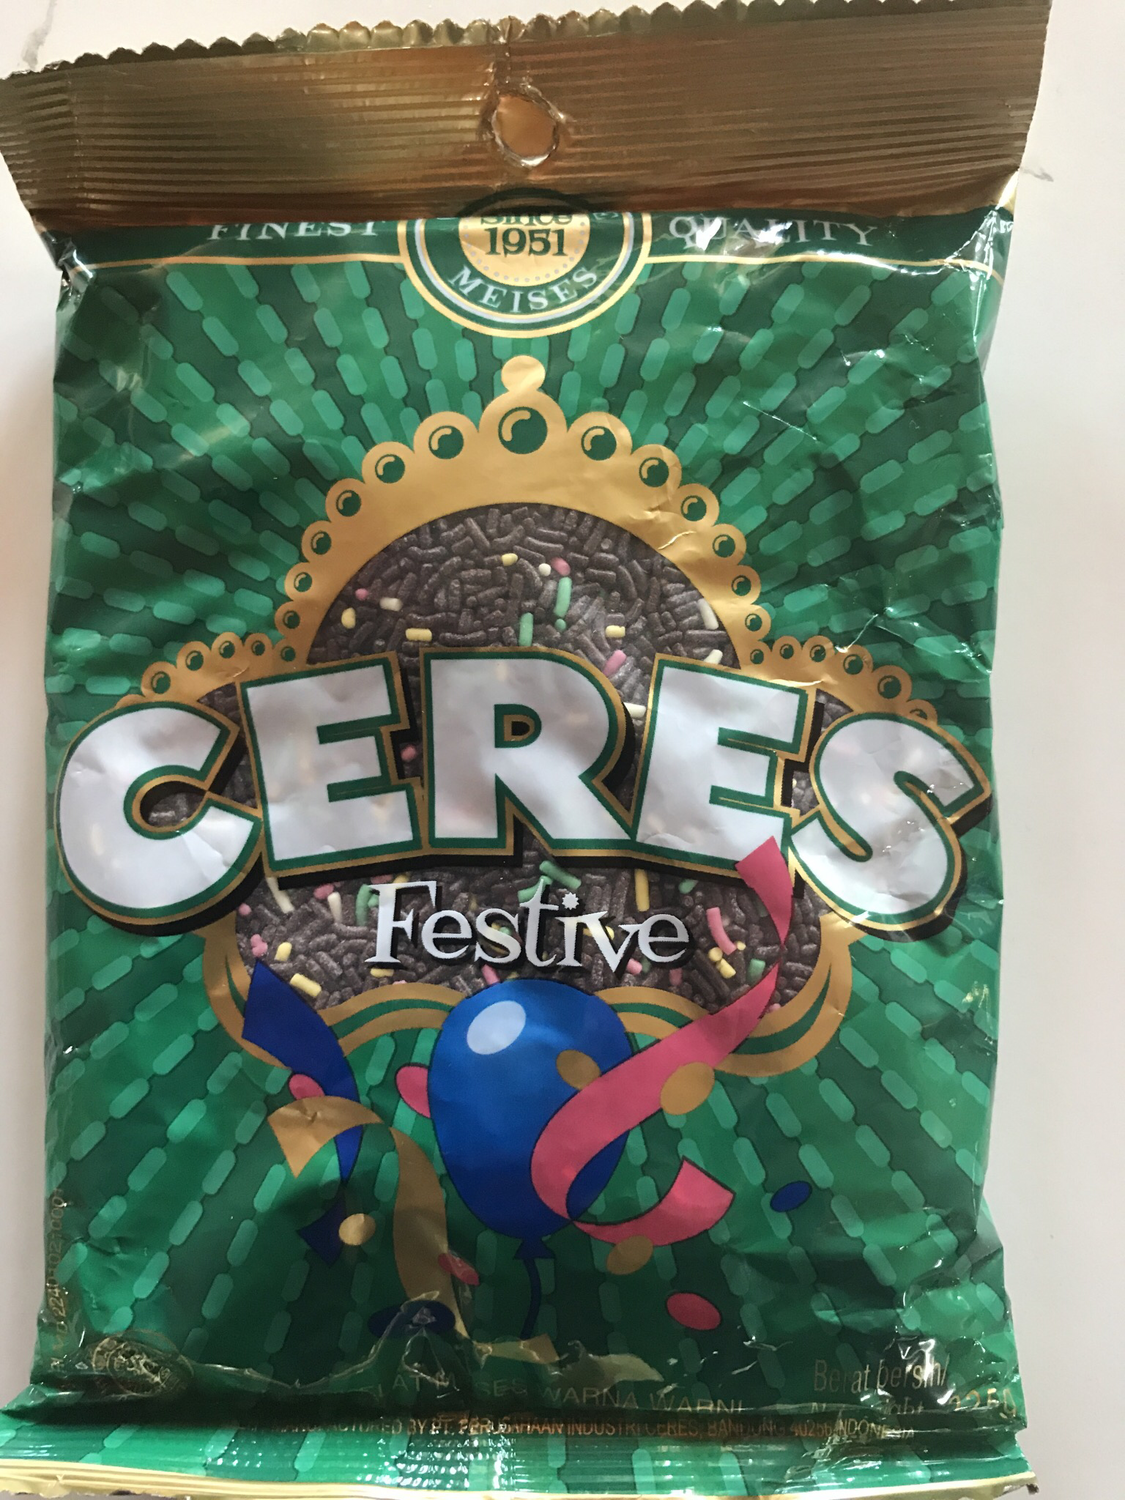 Ceres Festive warna warni 90 gram